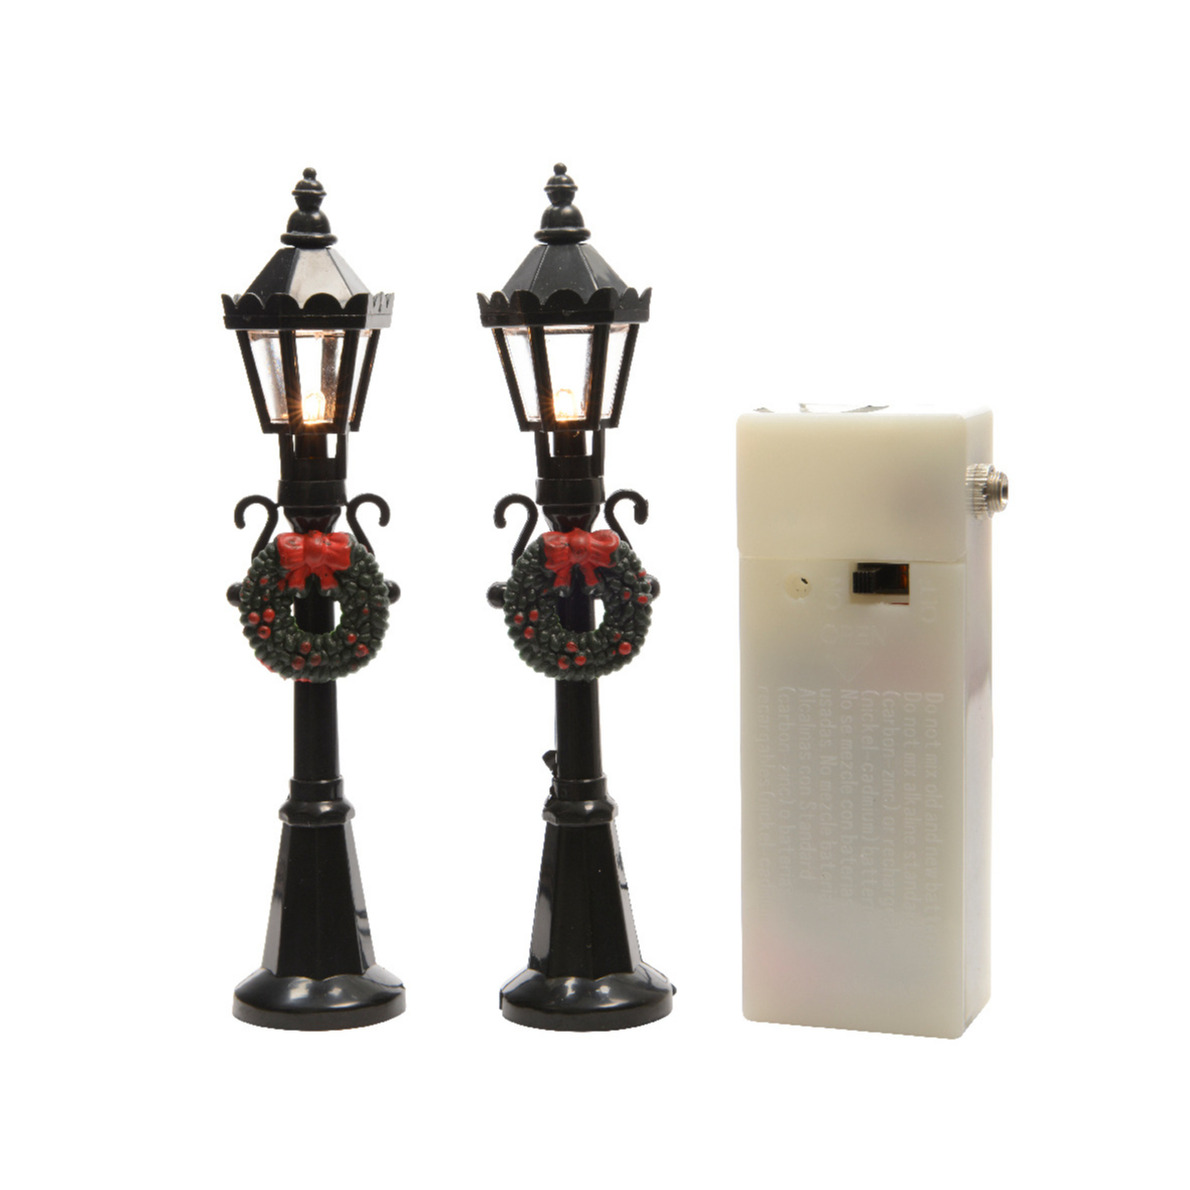 Lumineo kerstdorp lantaarns-lantaarnpalen 2x st 12 cm kerstdorp accessoires